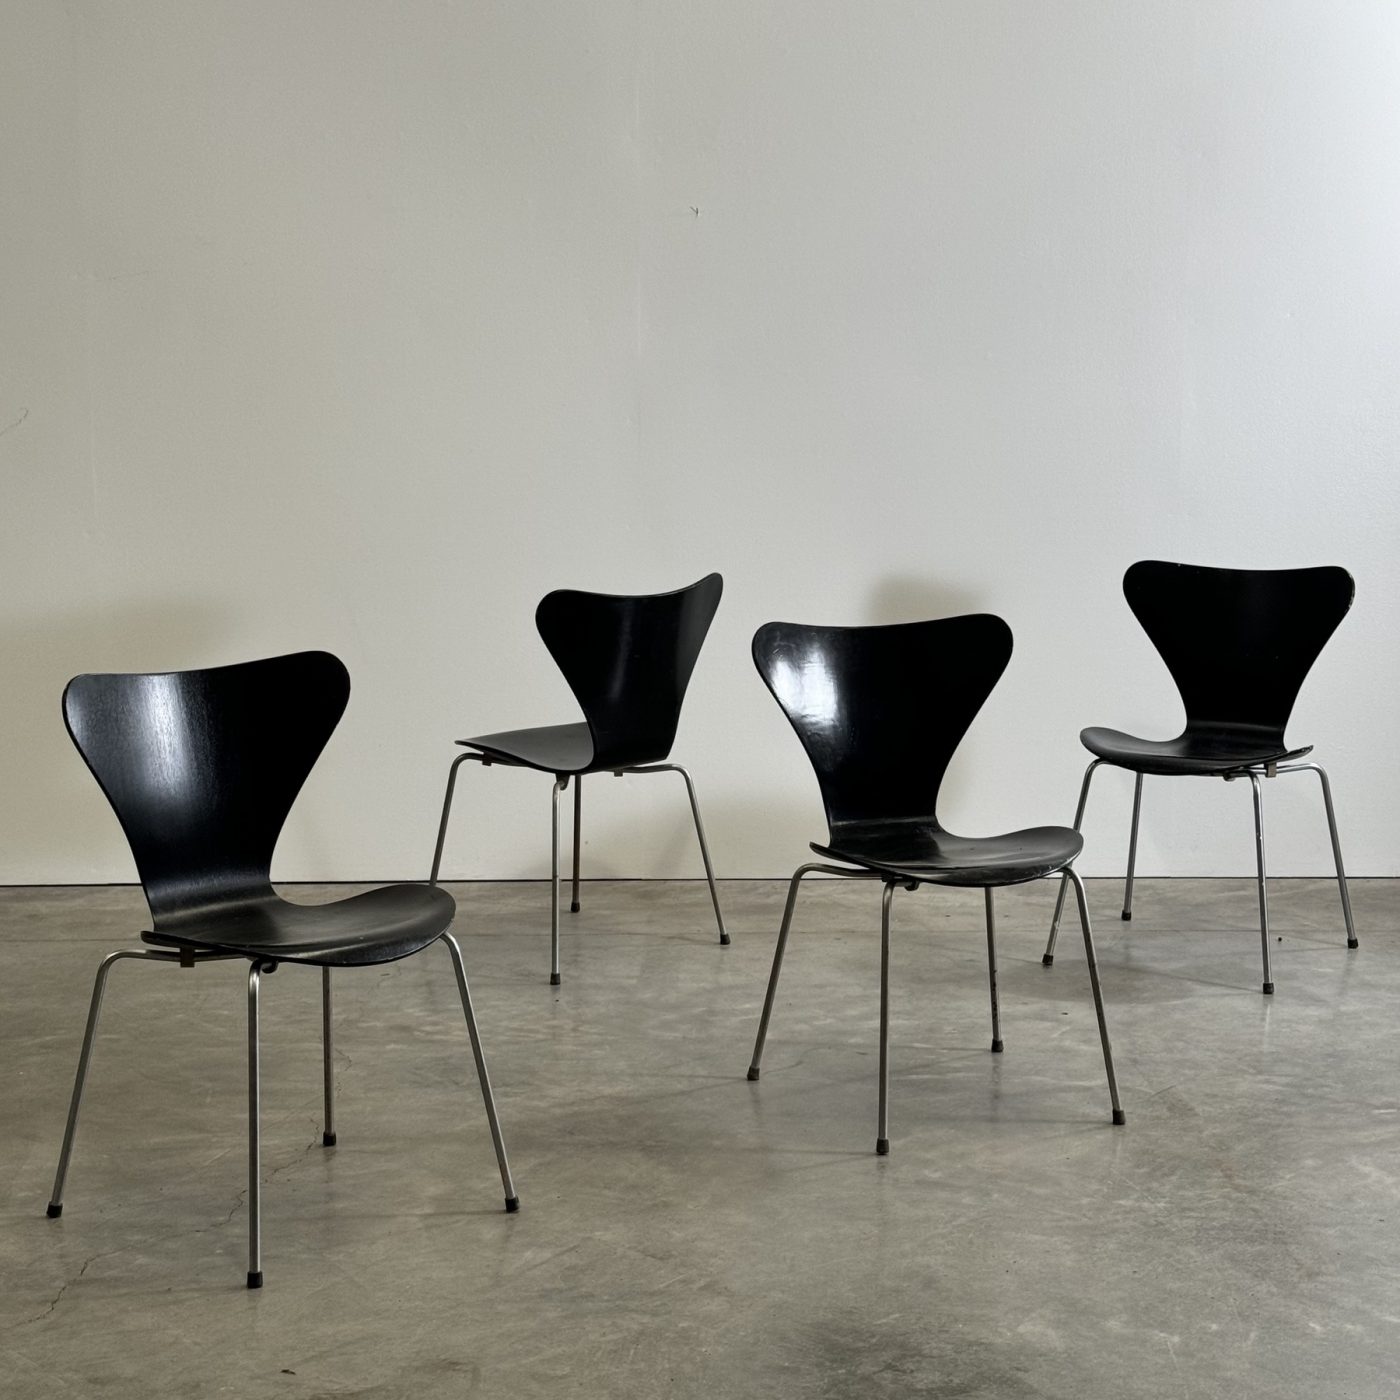 objet-vagabond-jacobsen-chairs0000